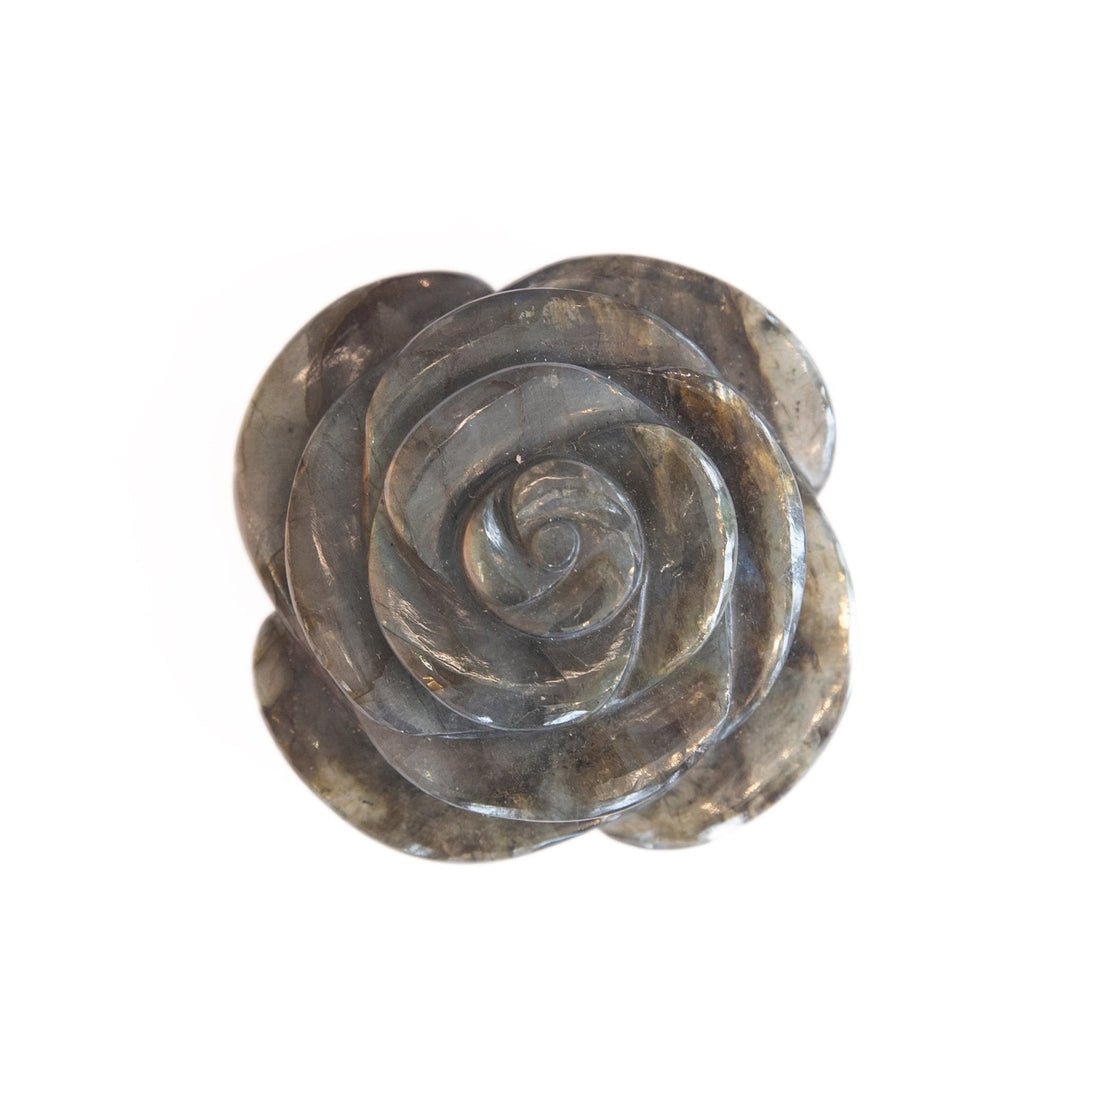 Labradorite Rose Carving - Ele Keats Jewelry